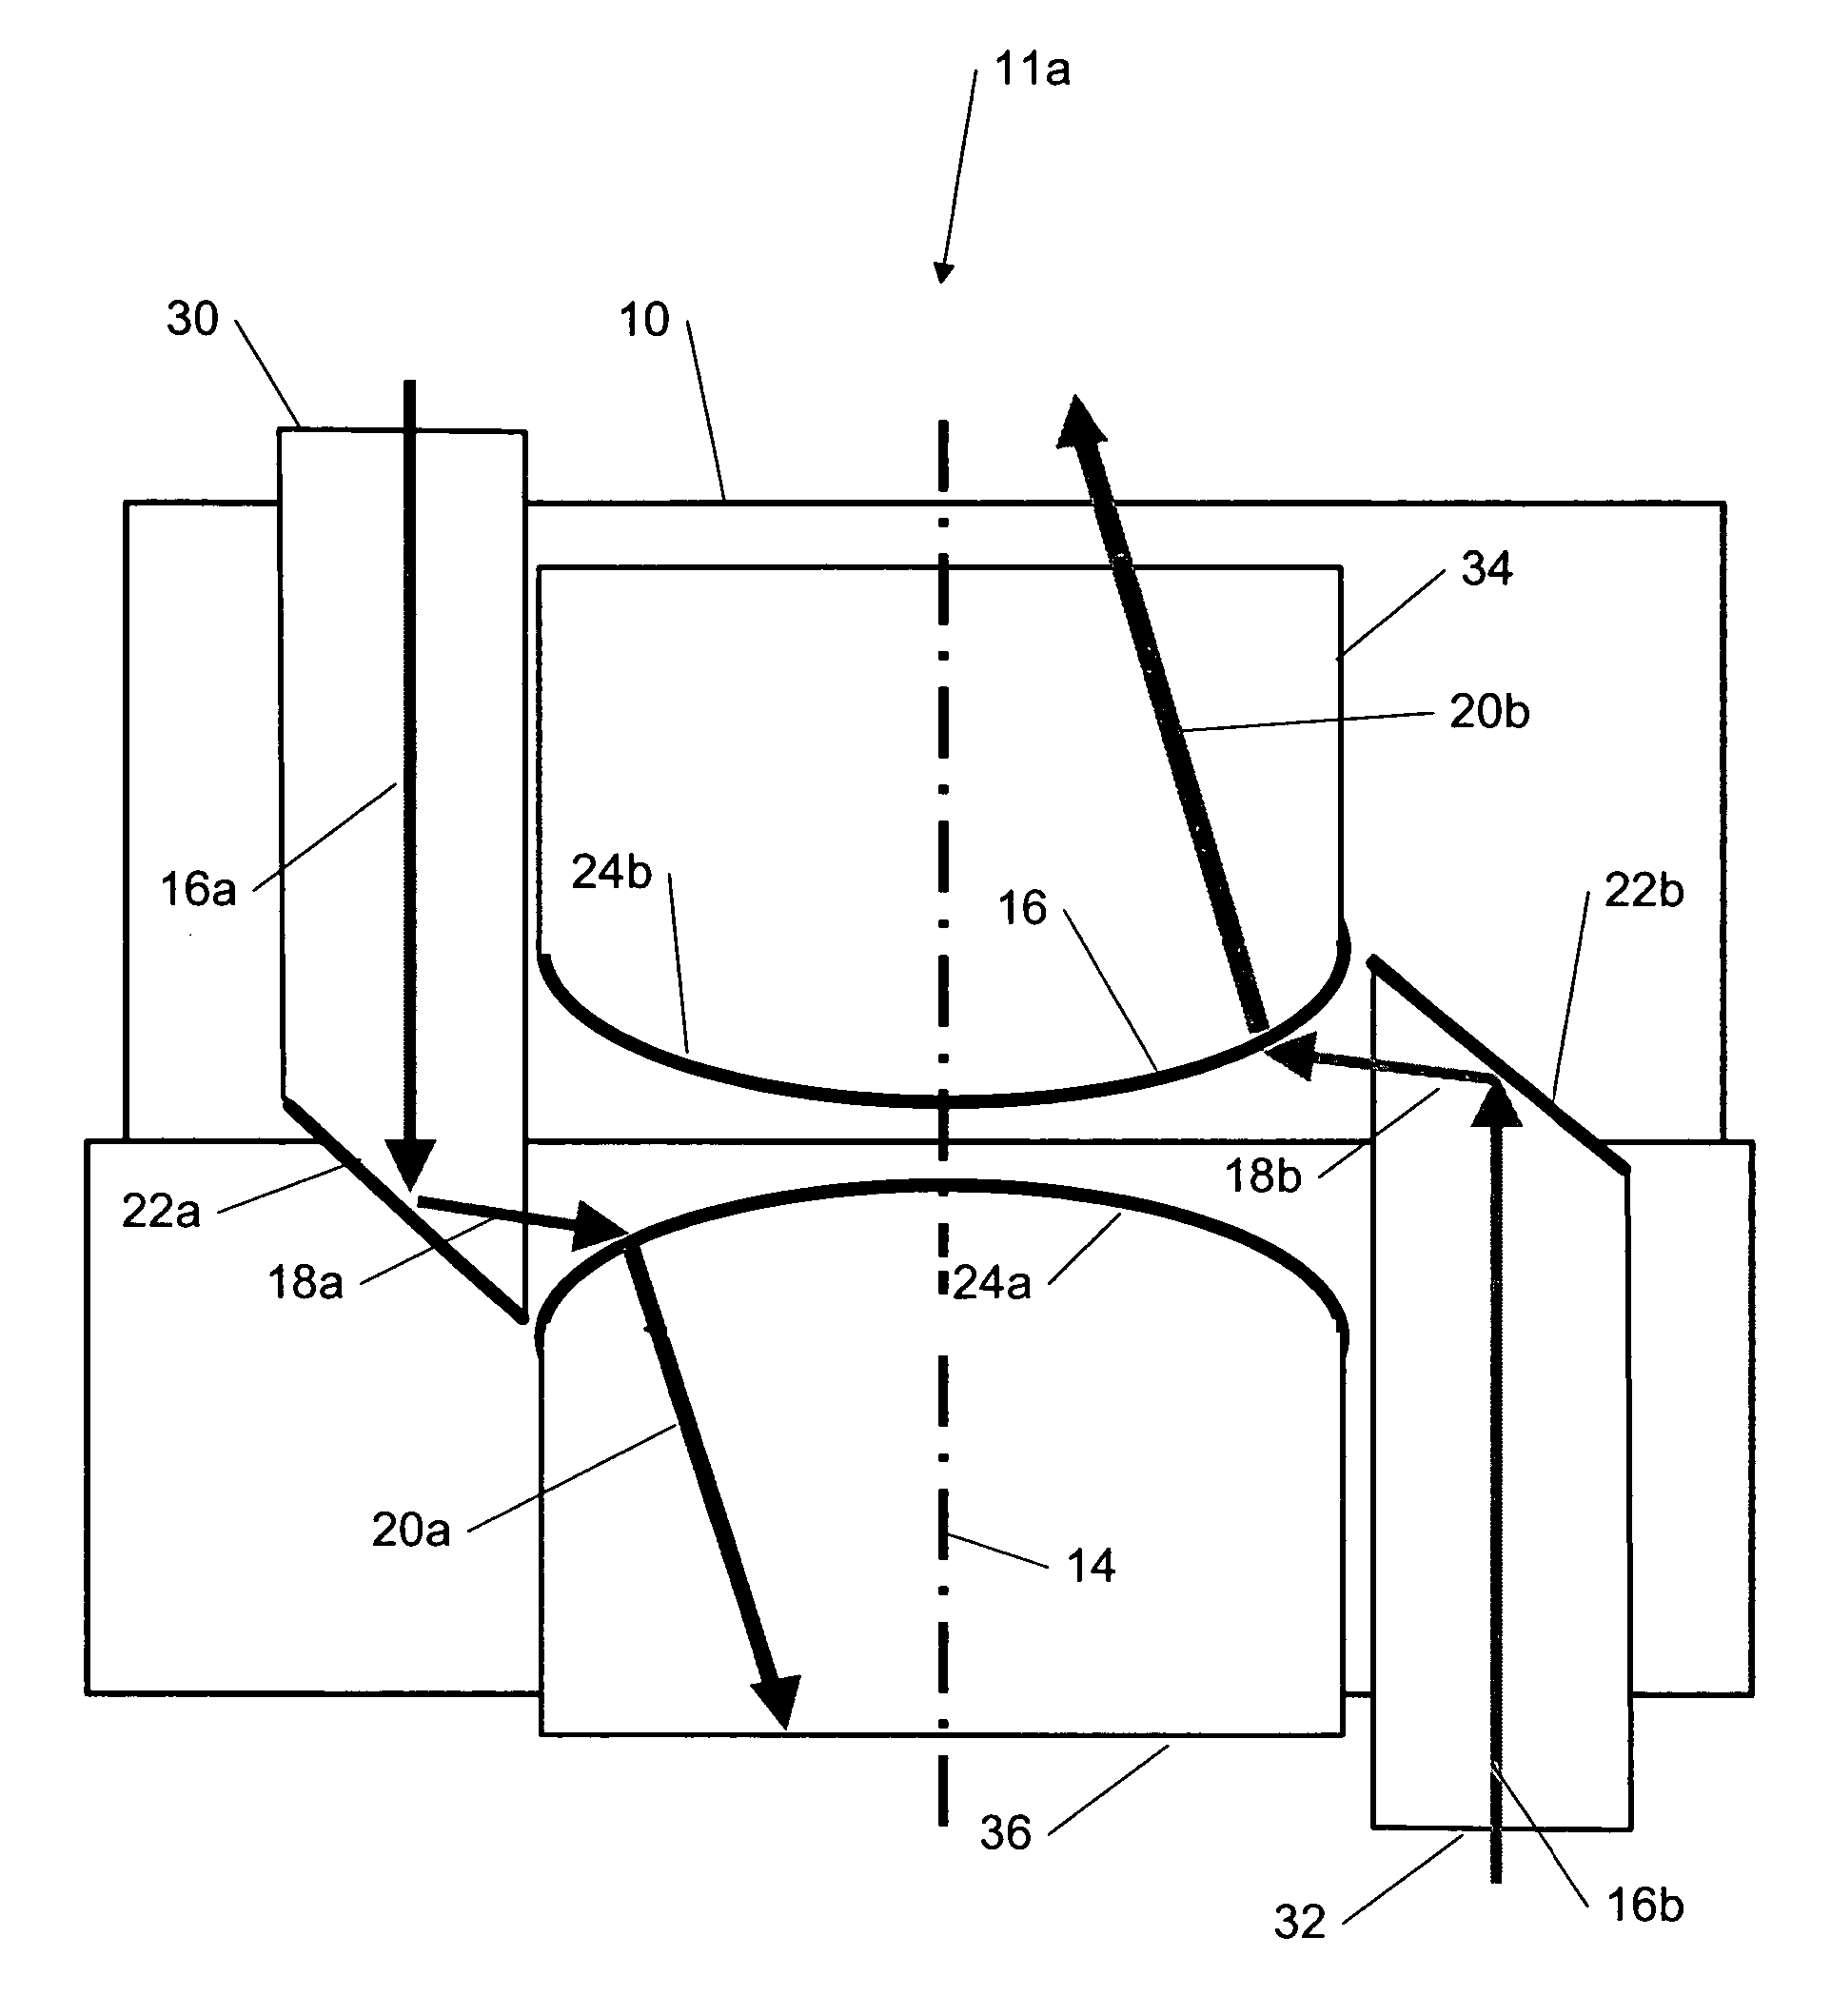 Optical bi-directional rotary hinge